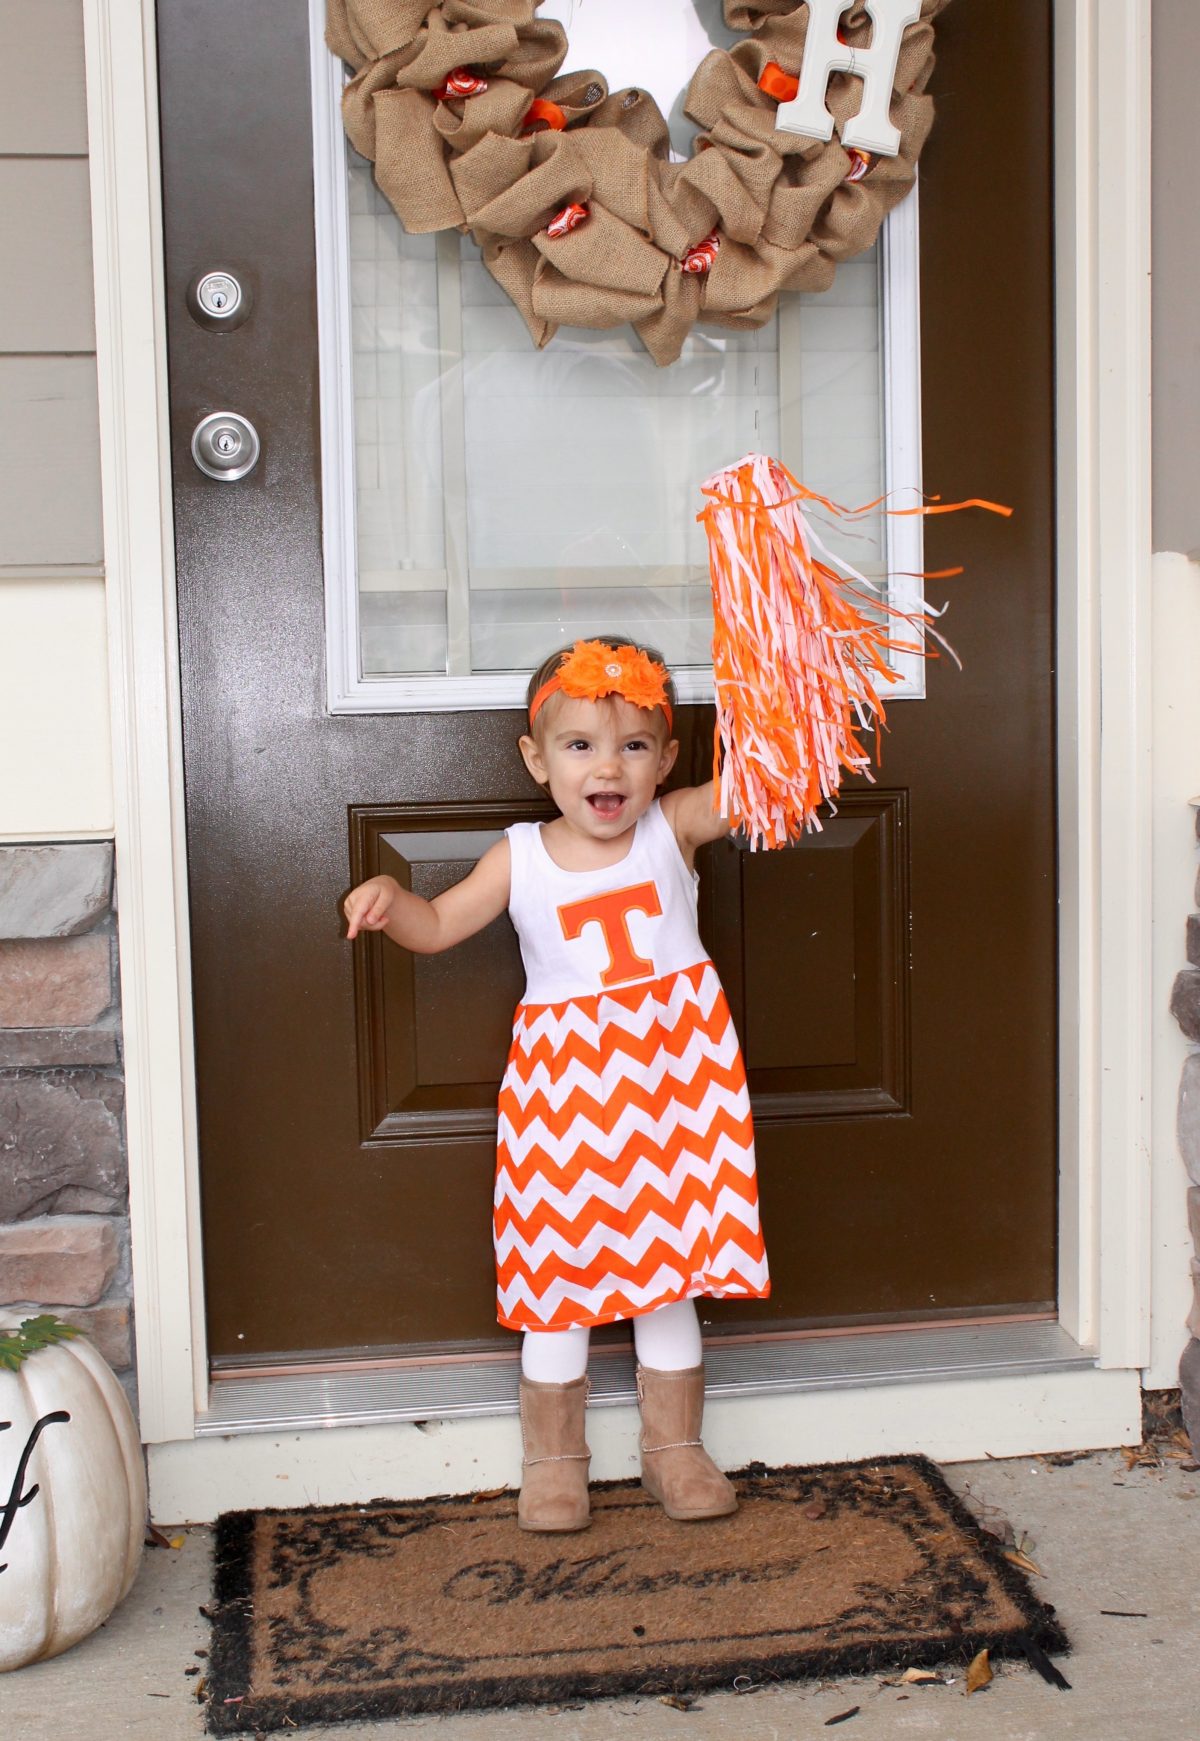 Toddler wearing University of Tennessee Dress holding Orange Pom Pom